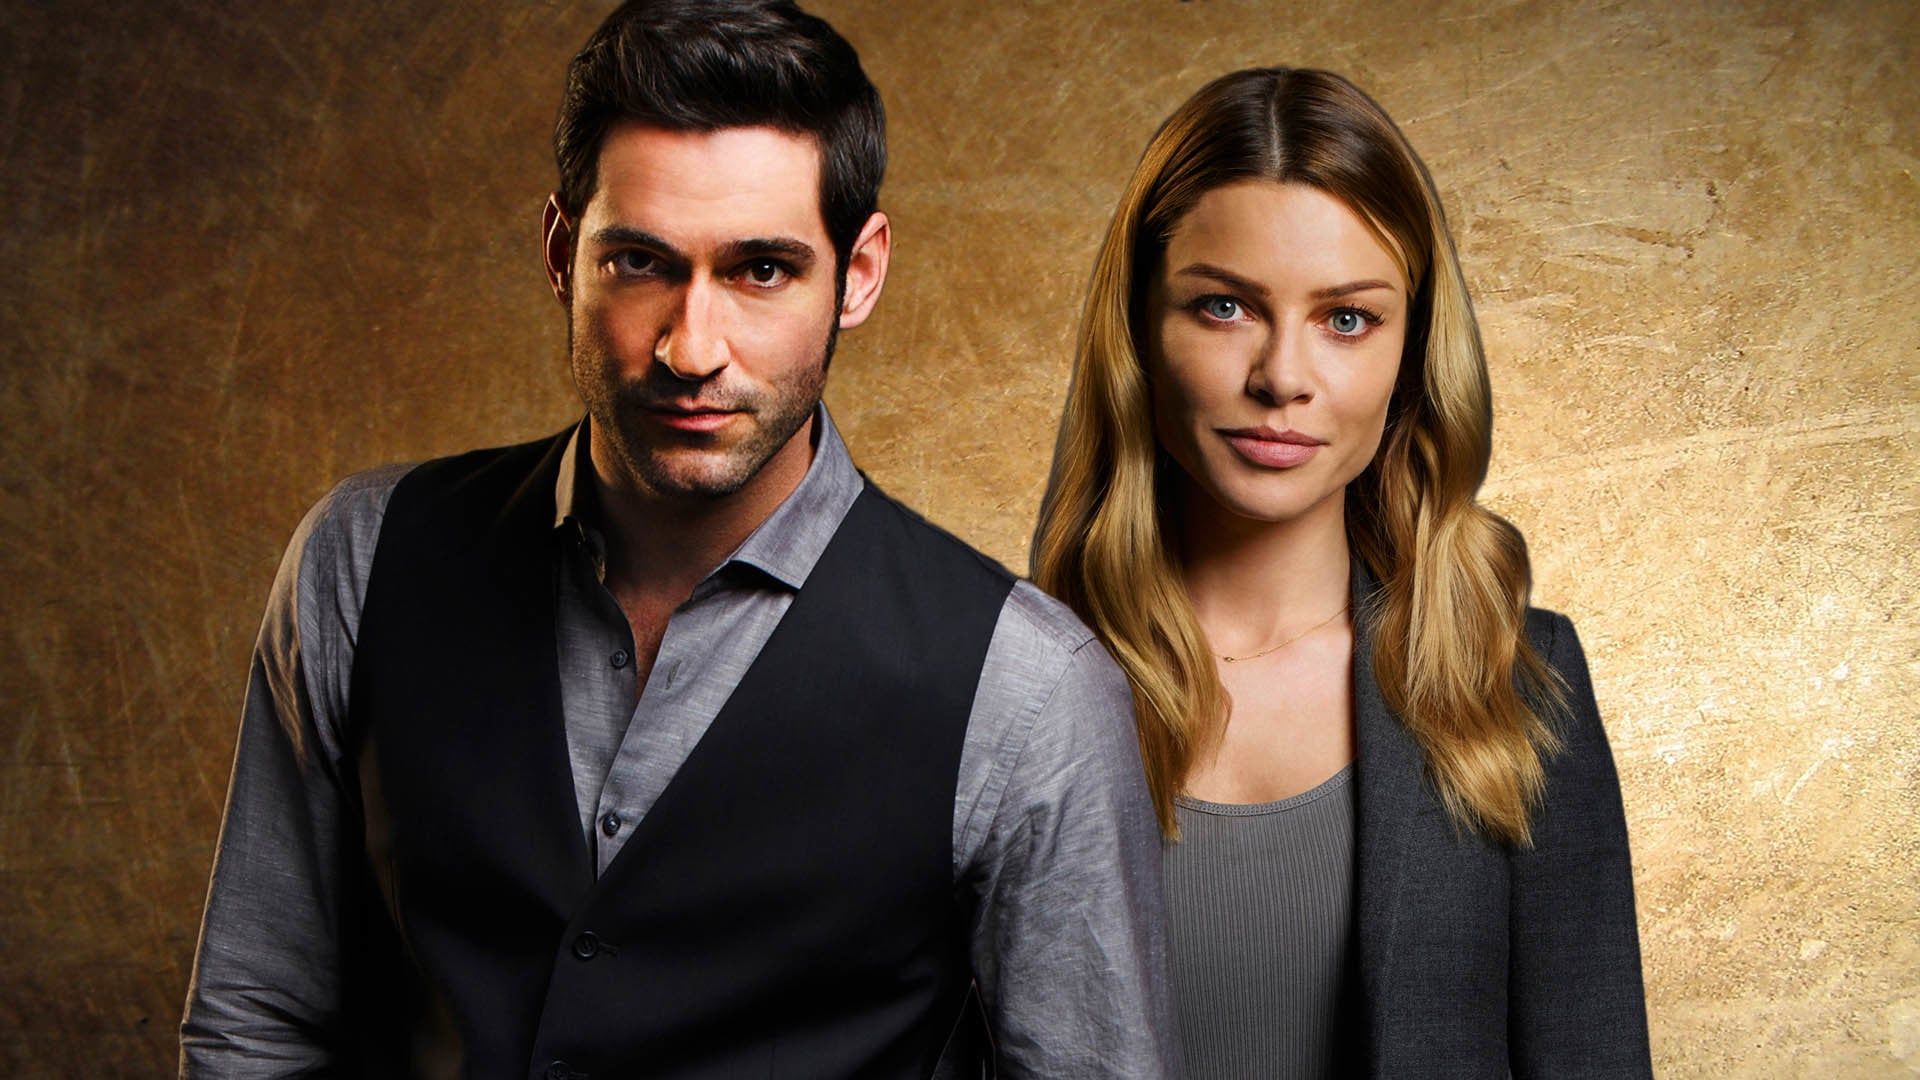 Lucifer Season 5 Plot Details Revealed, Chloe and Devil to have